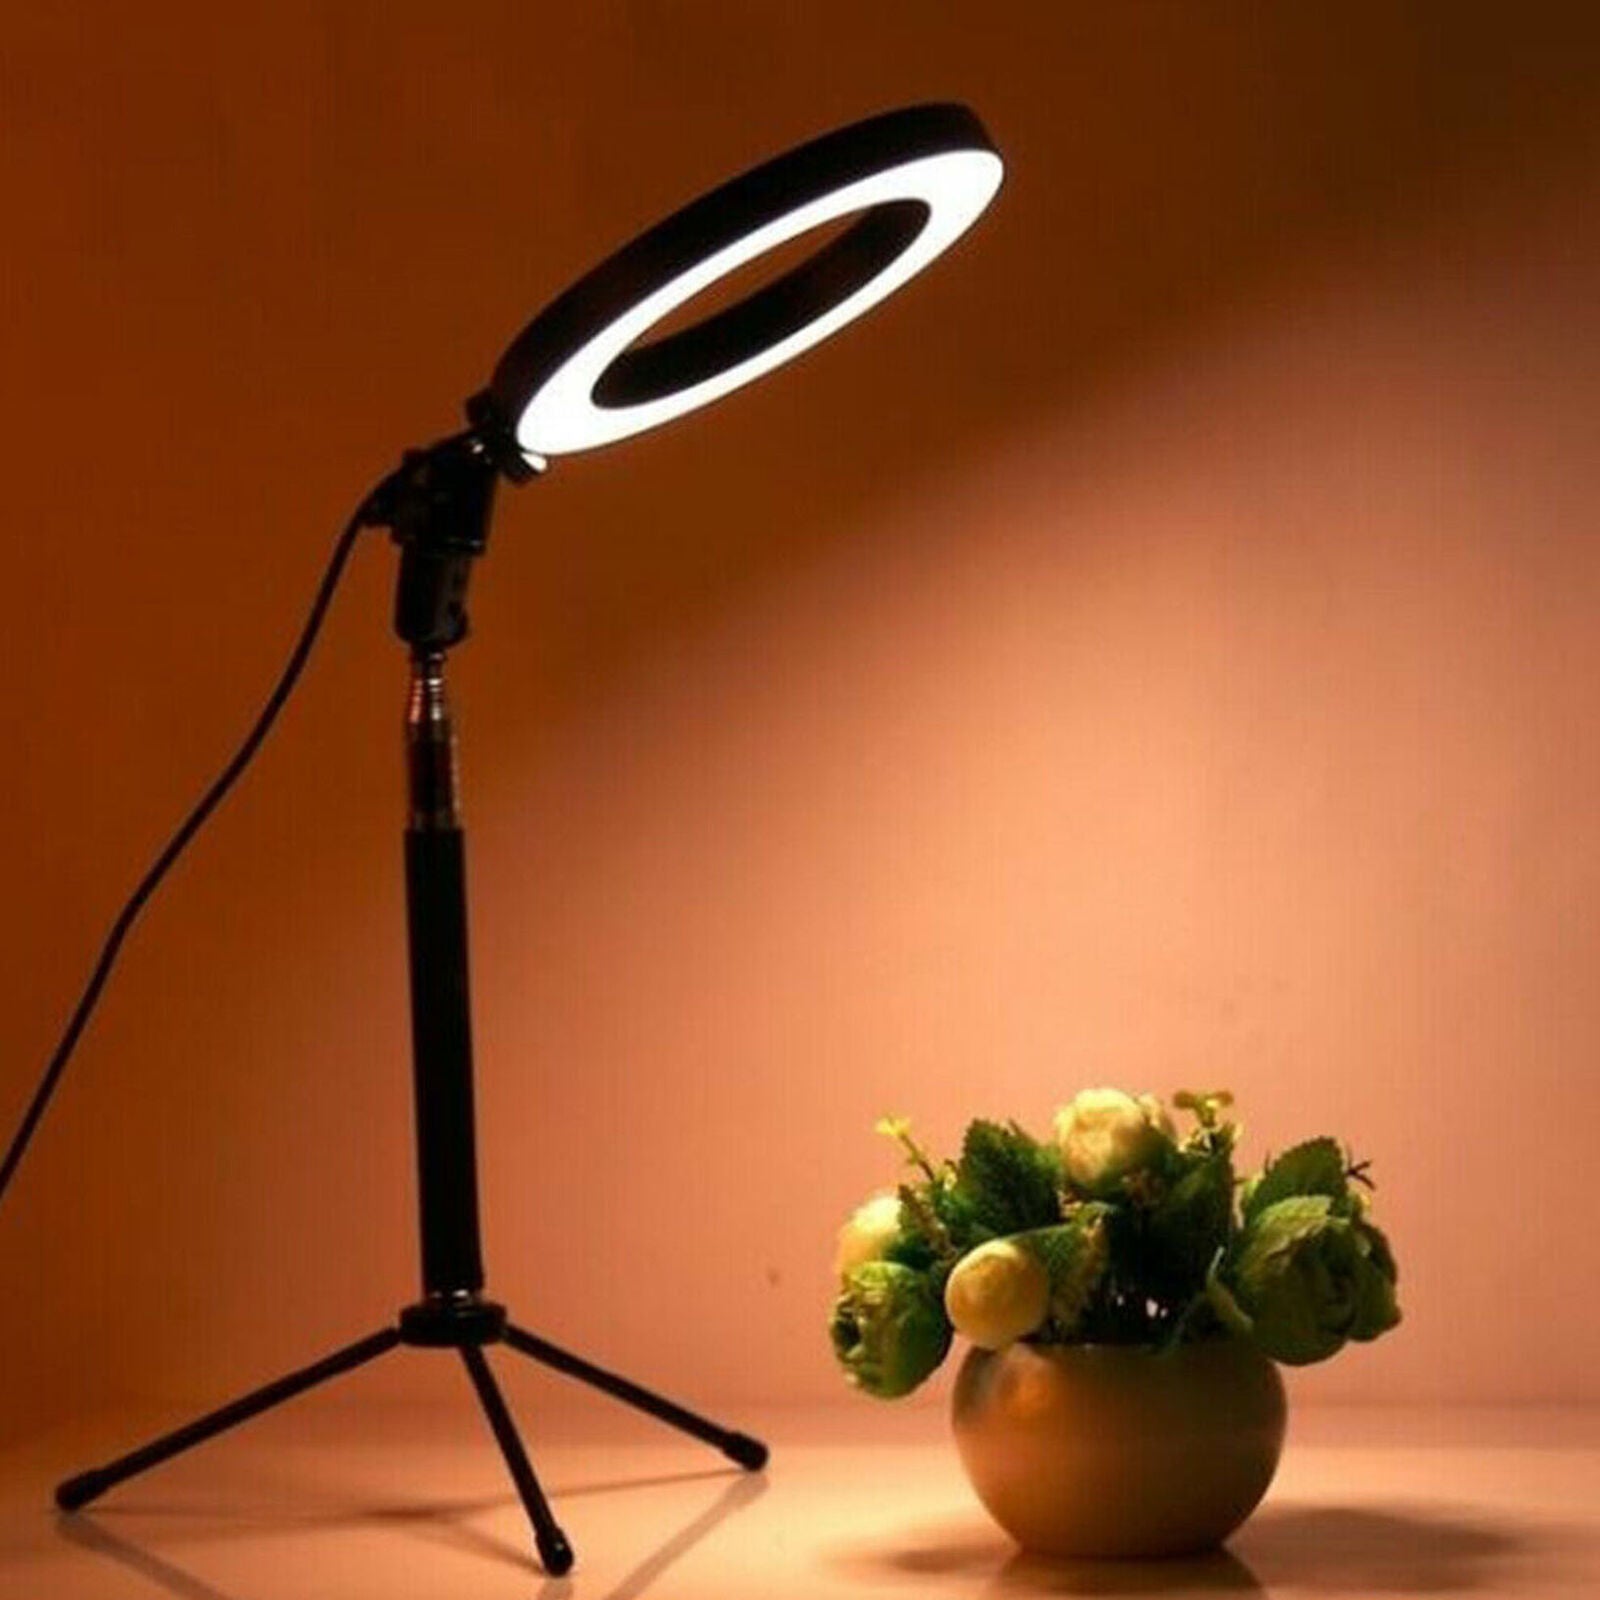 128 LED Ring Fill Light Studio Photo Video USB Dimmable Lamp Selfie Camera Phone